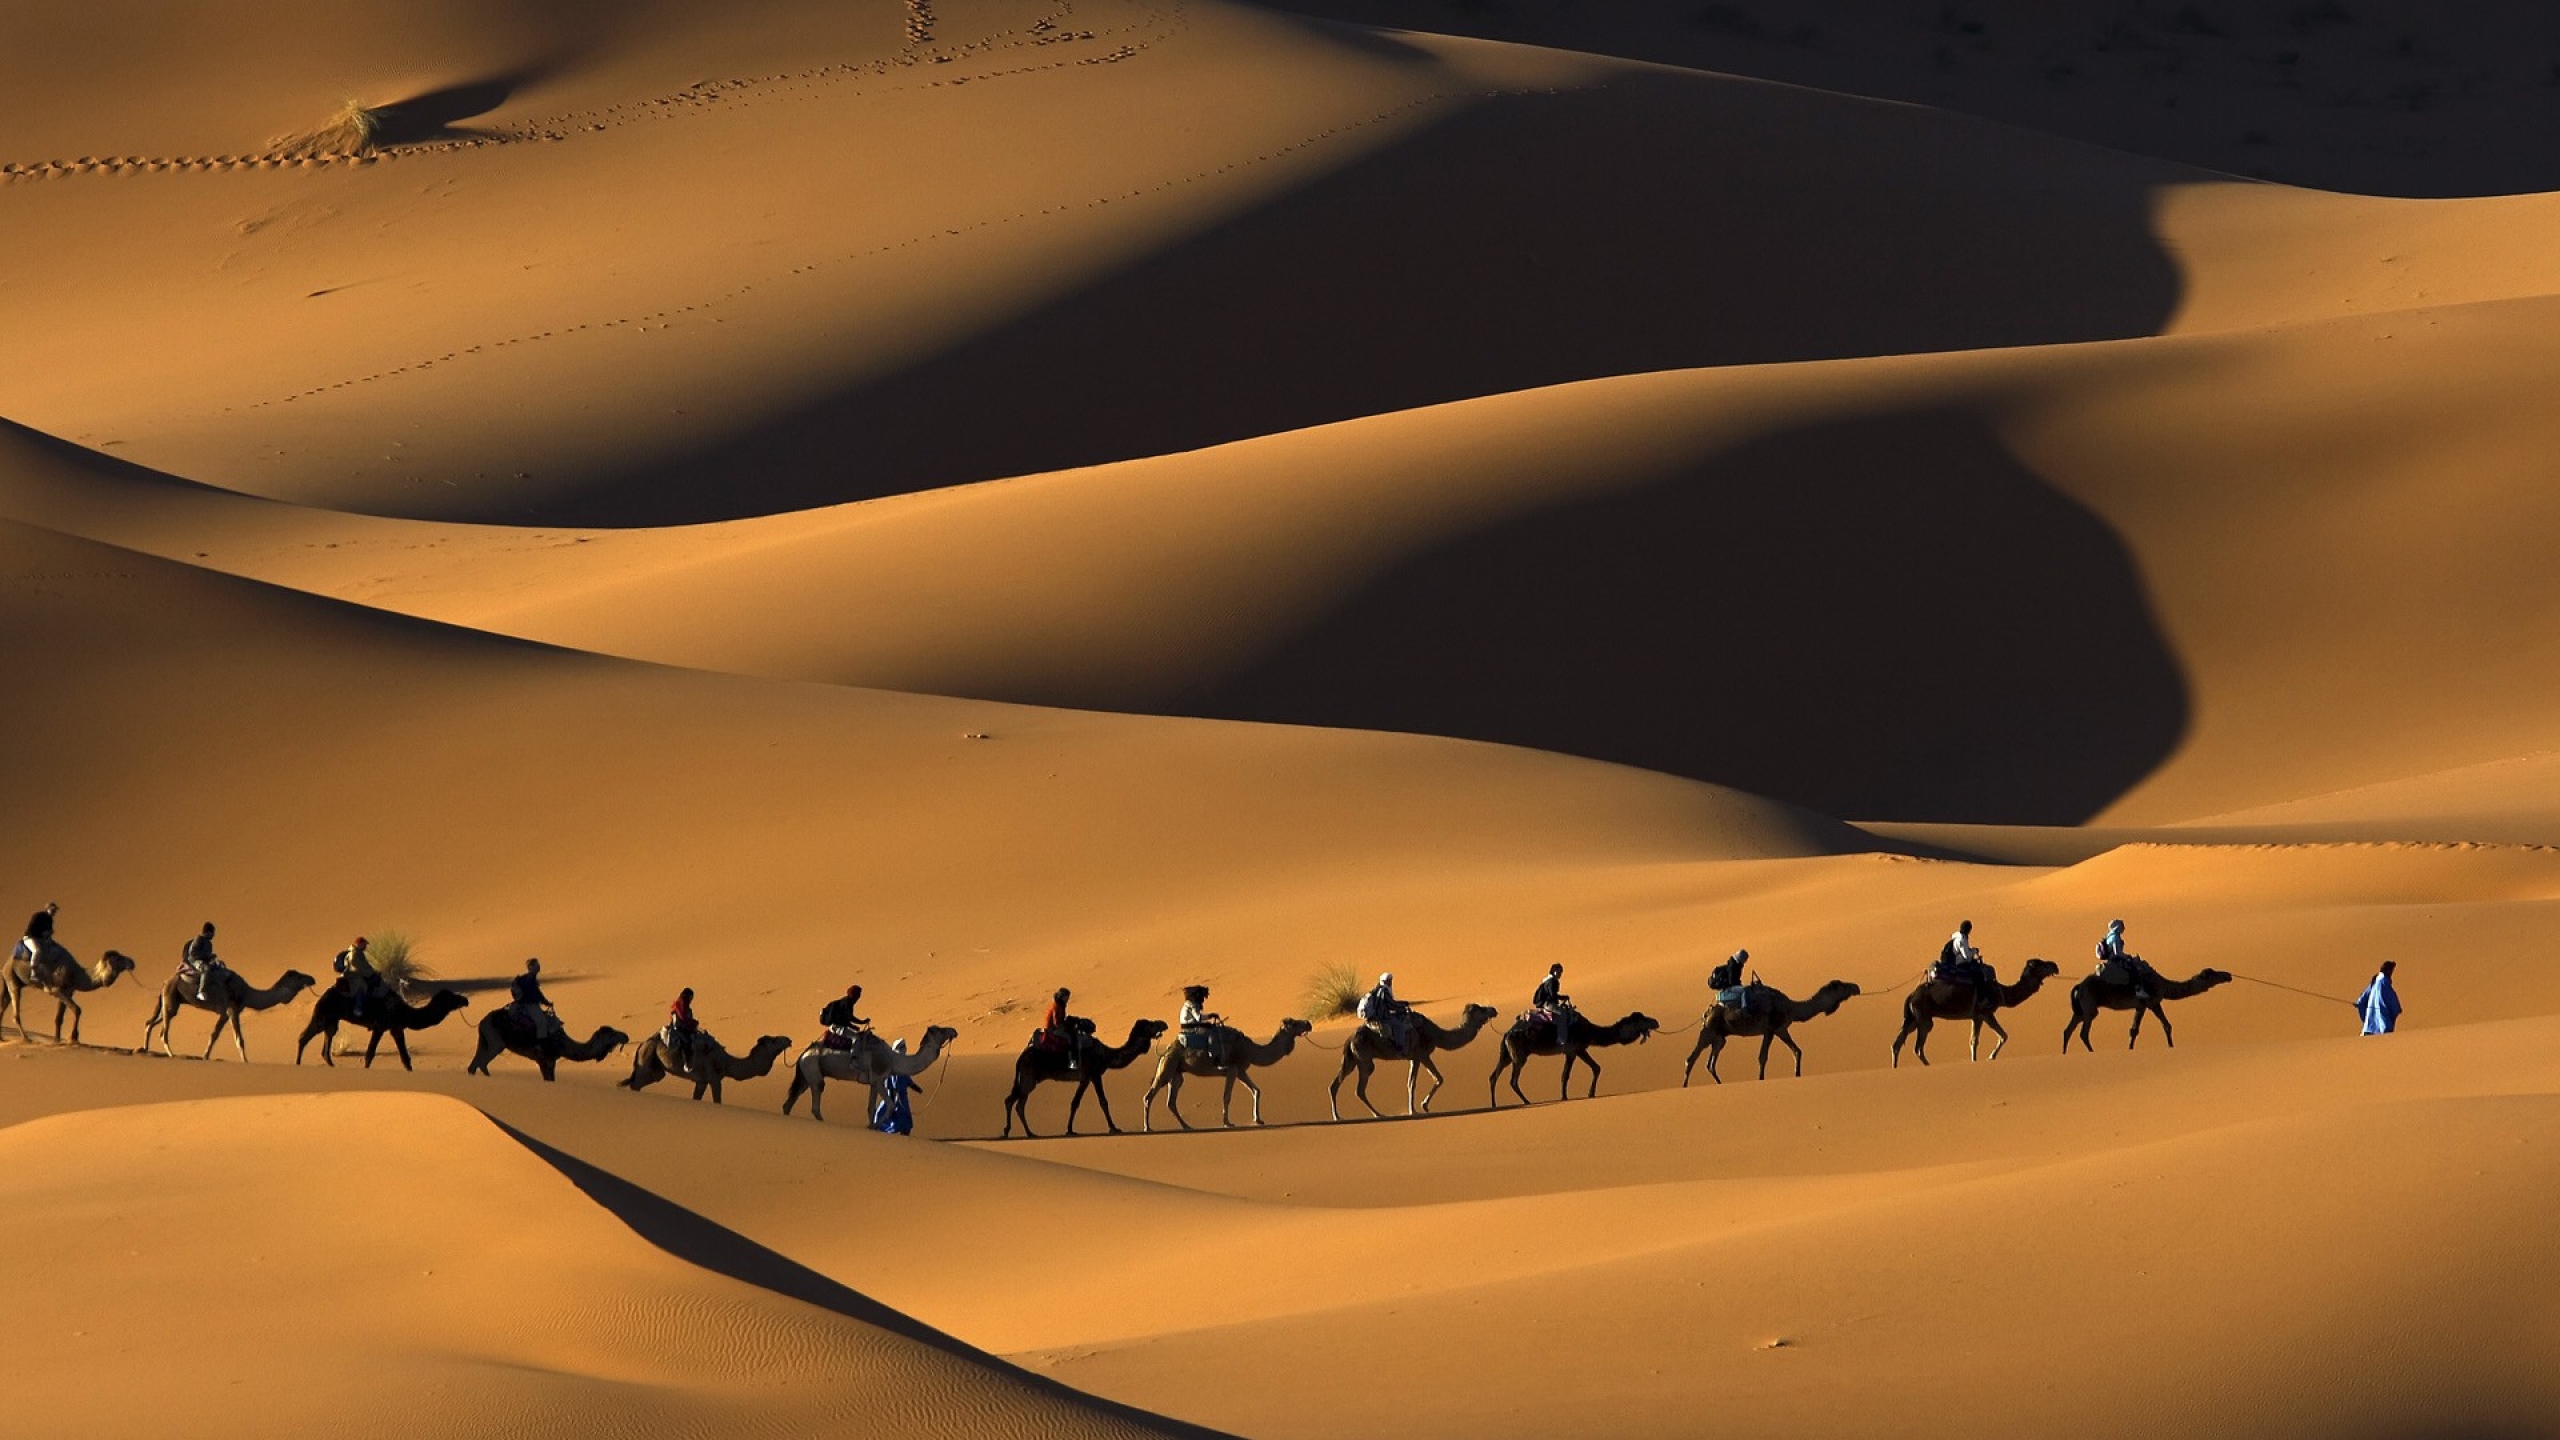 sand, camel, photography, caravan, camel caravan, desert, morocco, people